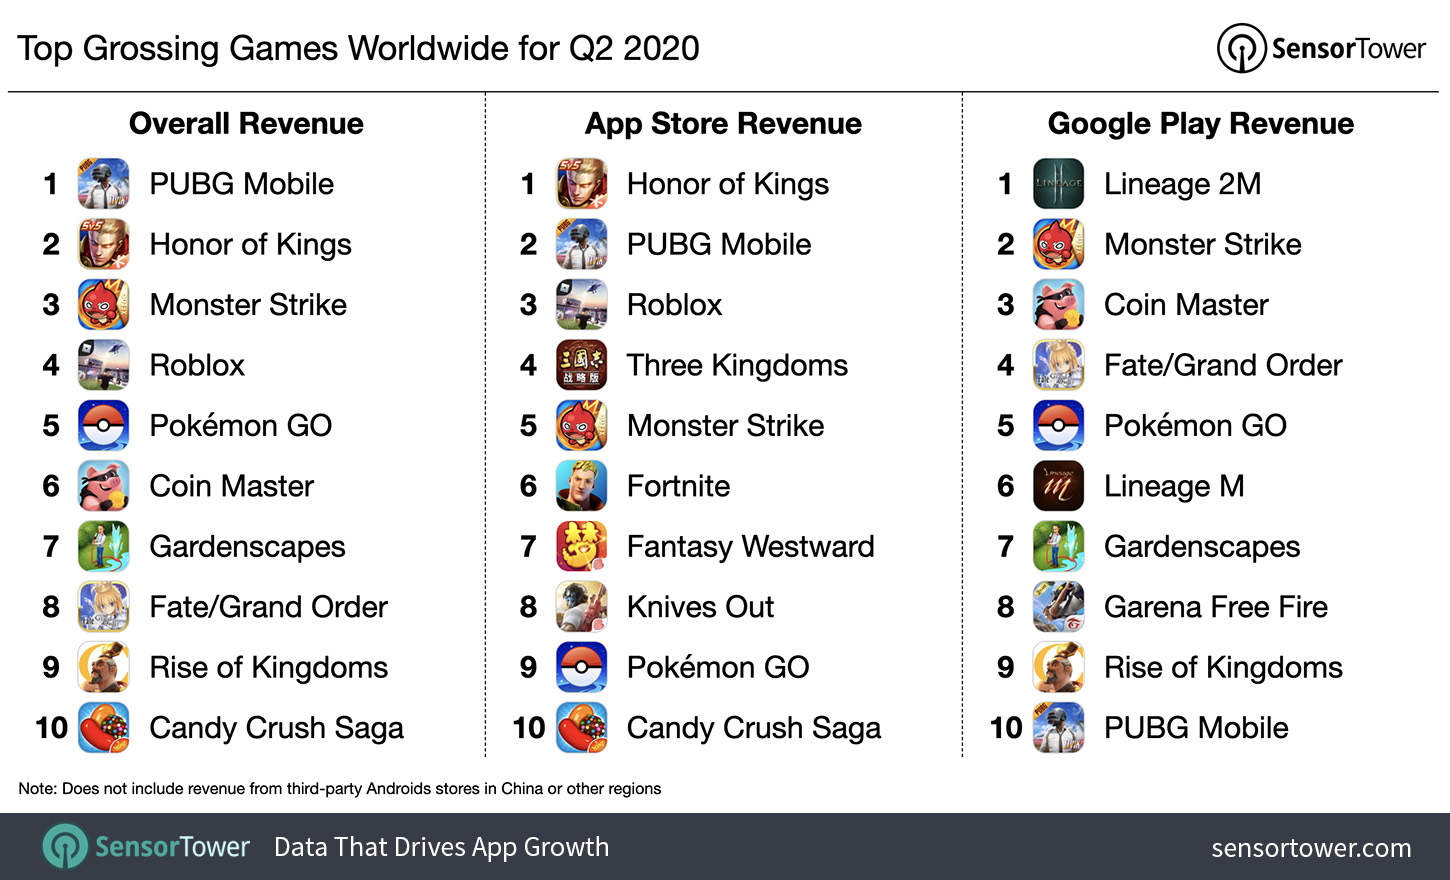 Top Grossing Games Worldwide Q2 2020